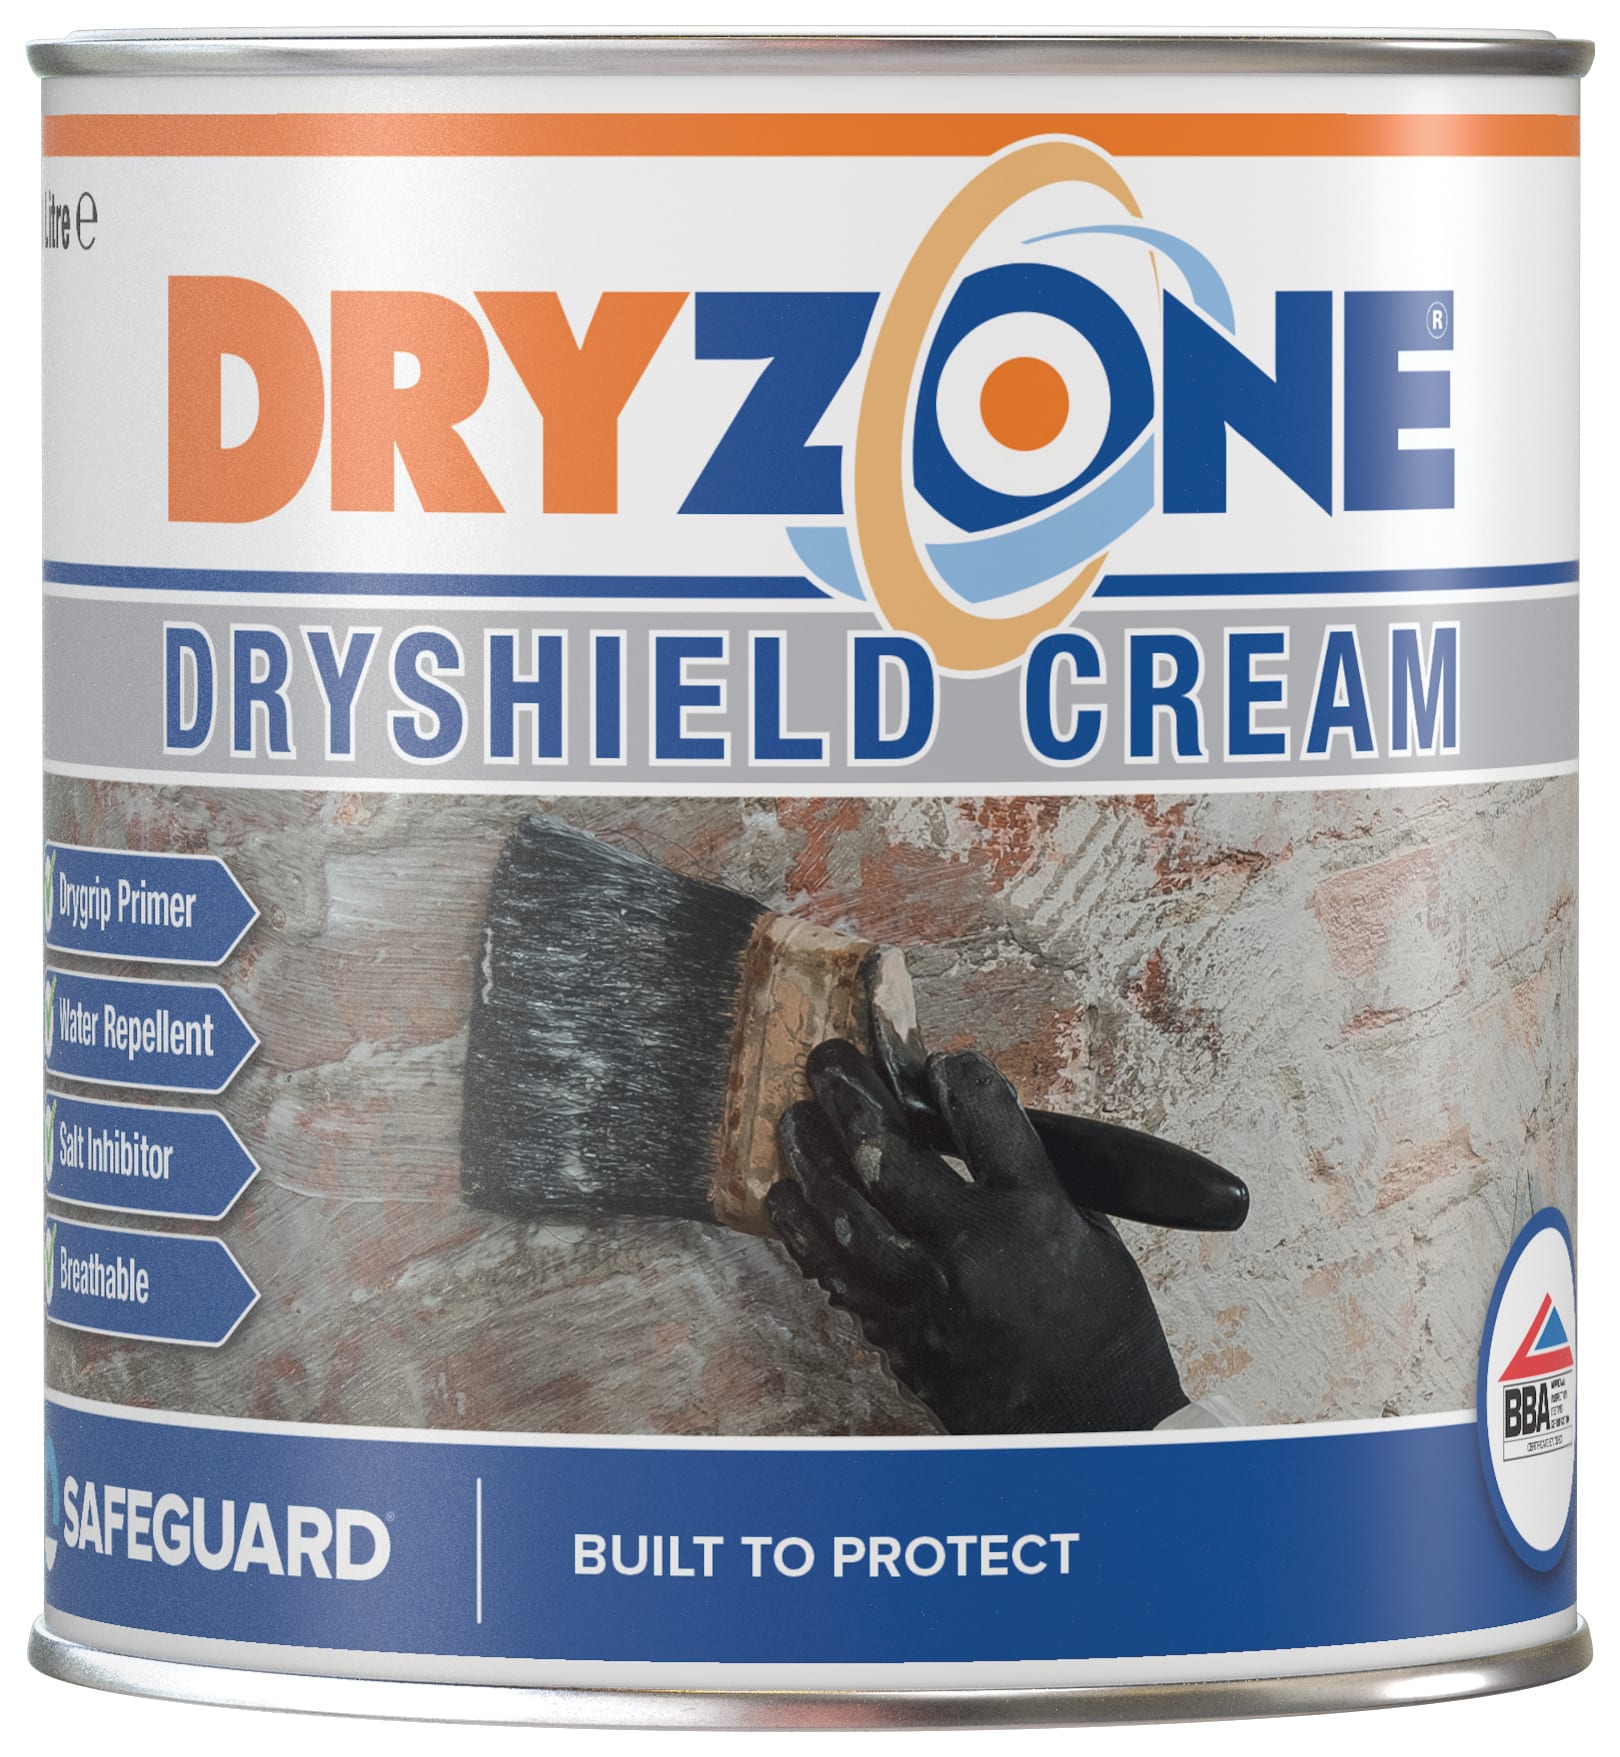 Dryzone Dryshield Cream - 1L